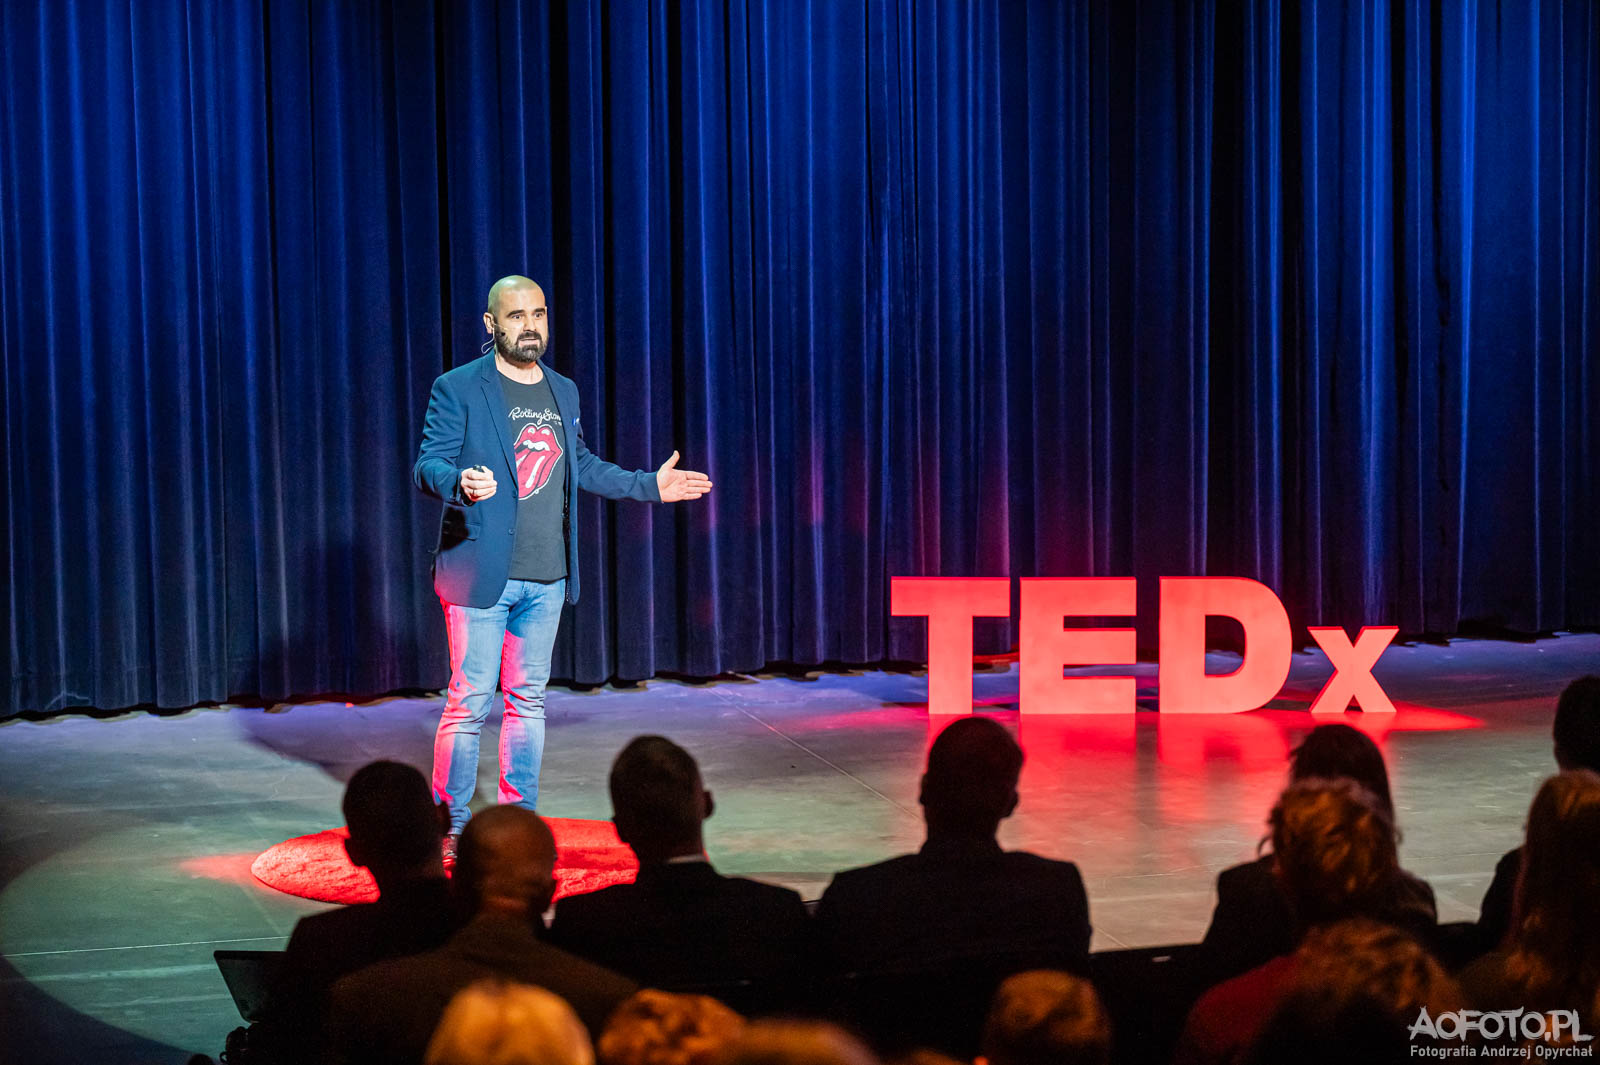 TedX Talks